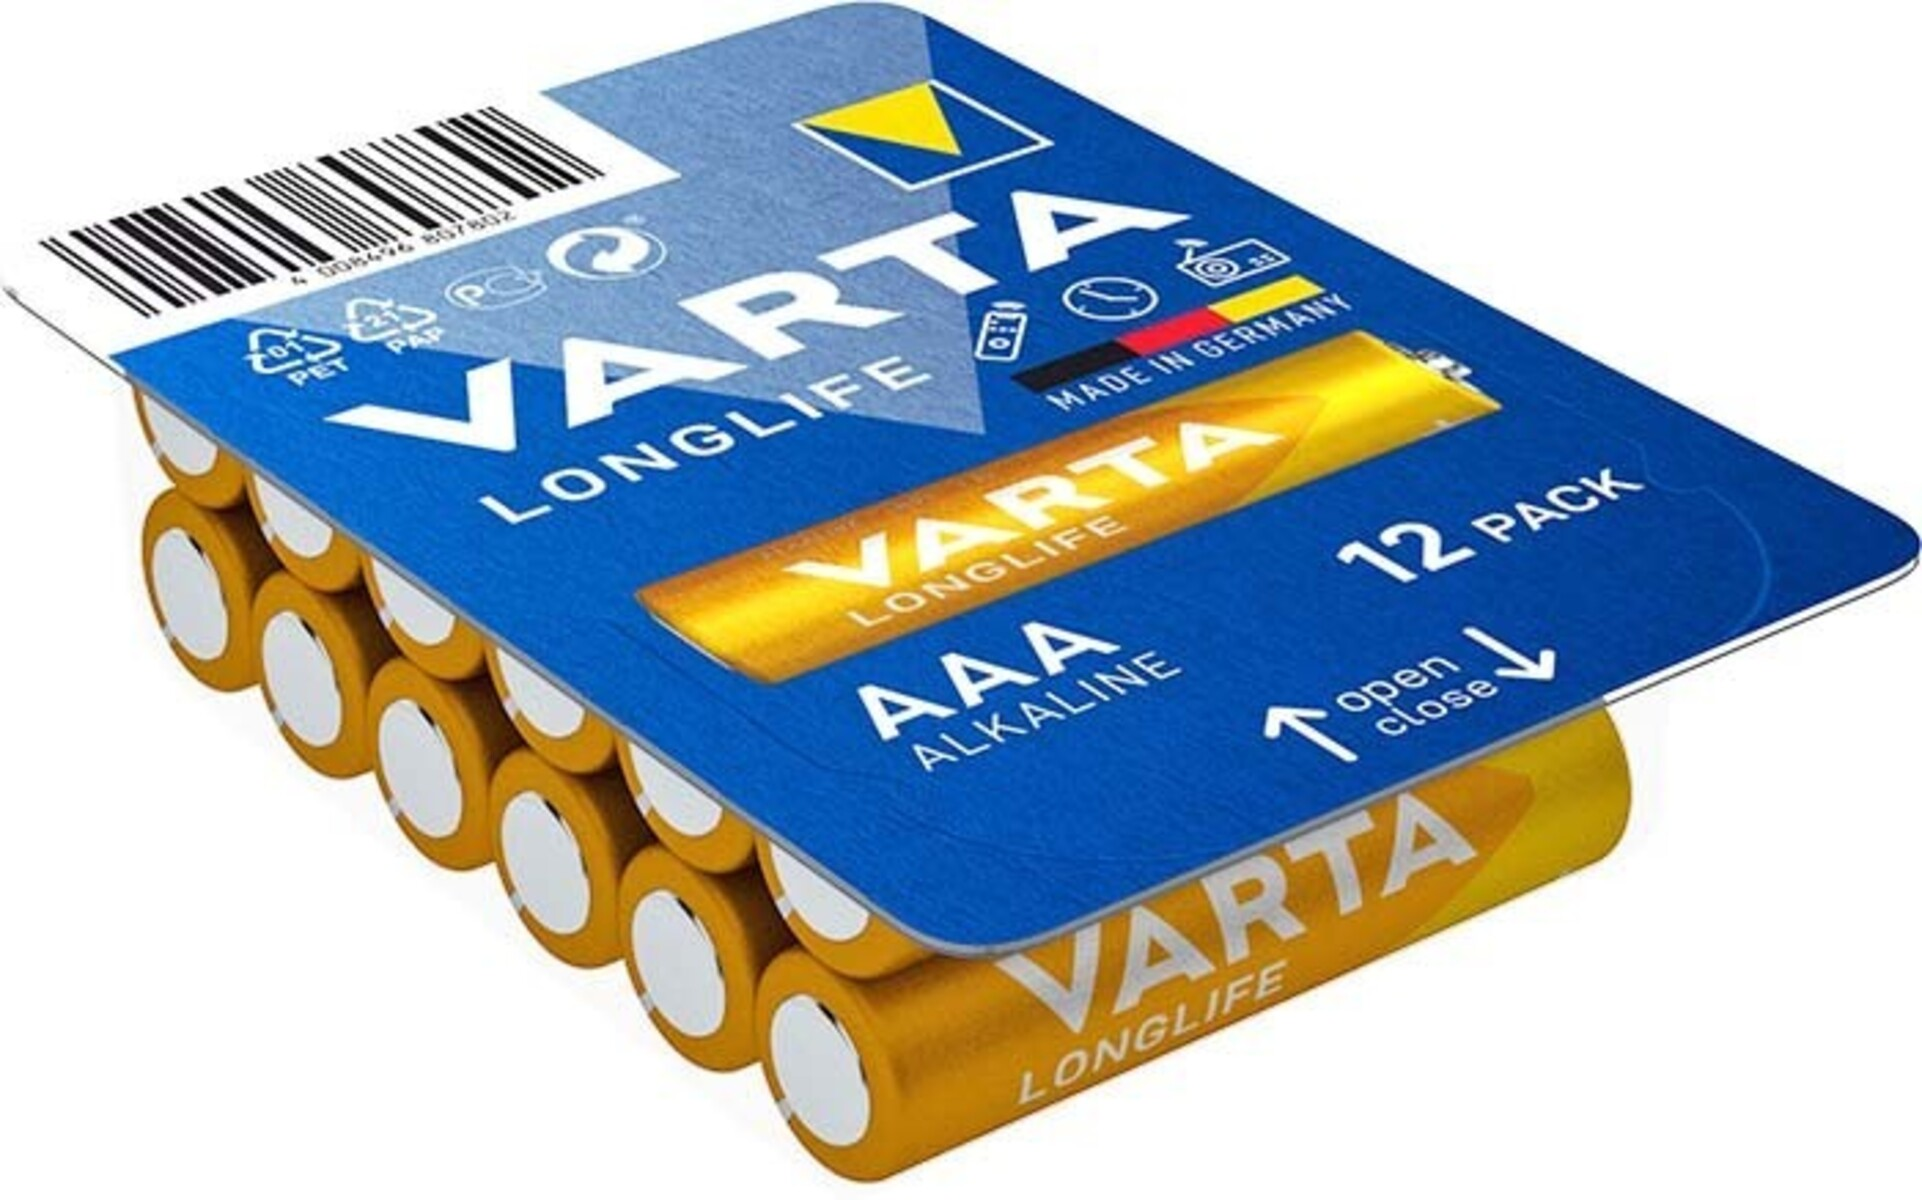 AlMn, Longlife AAA Big Volt, Batterie, 1.5 Ah (12er) VARTA LR03 Micro Batterie Box 4703 AlMn 1.2